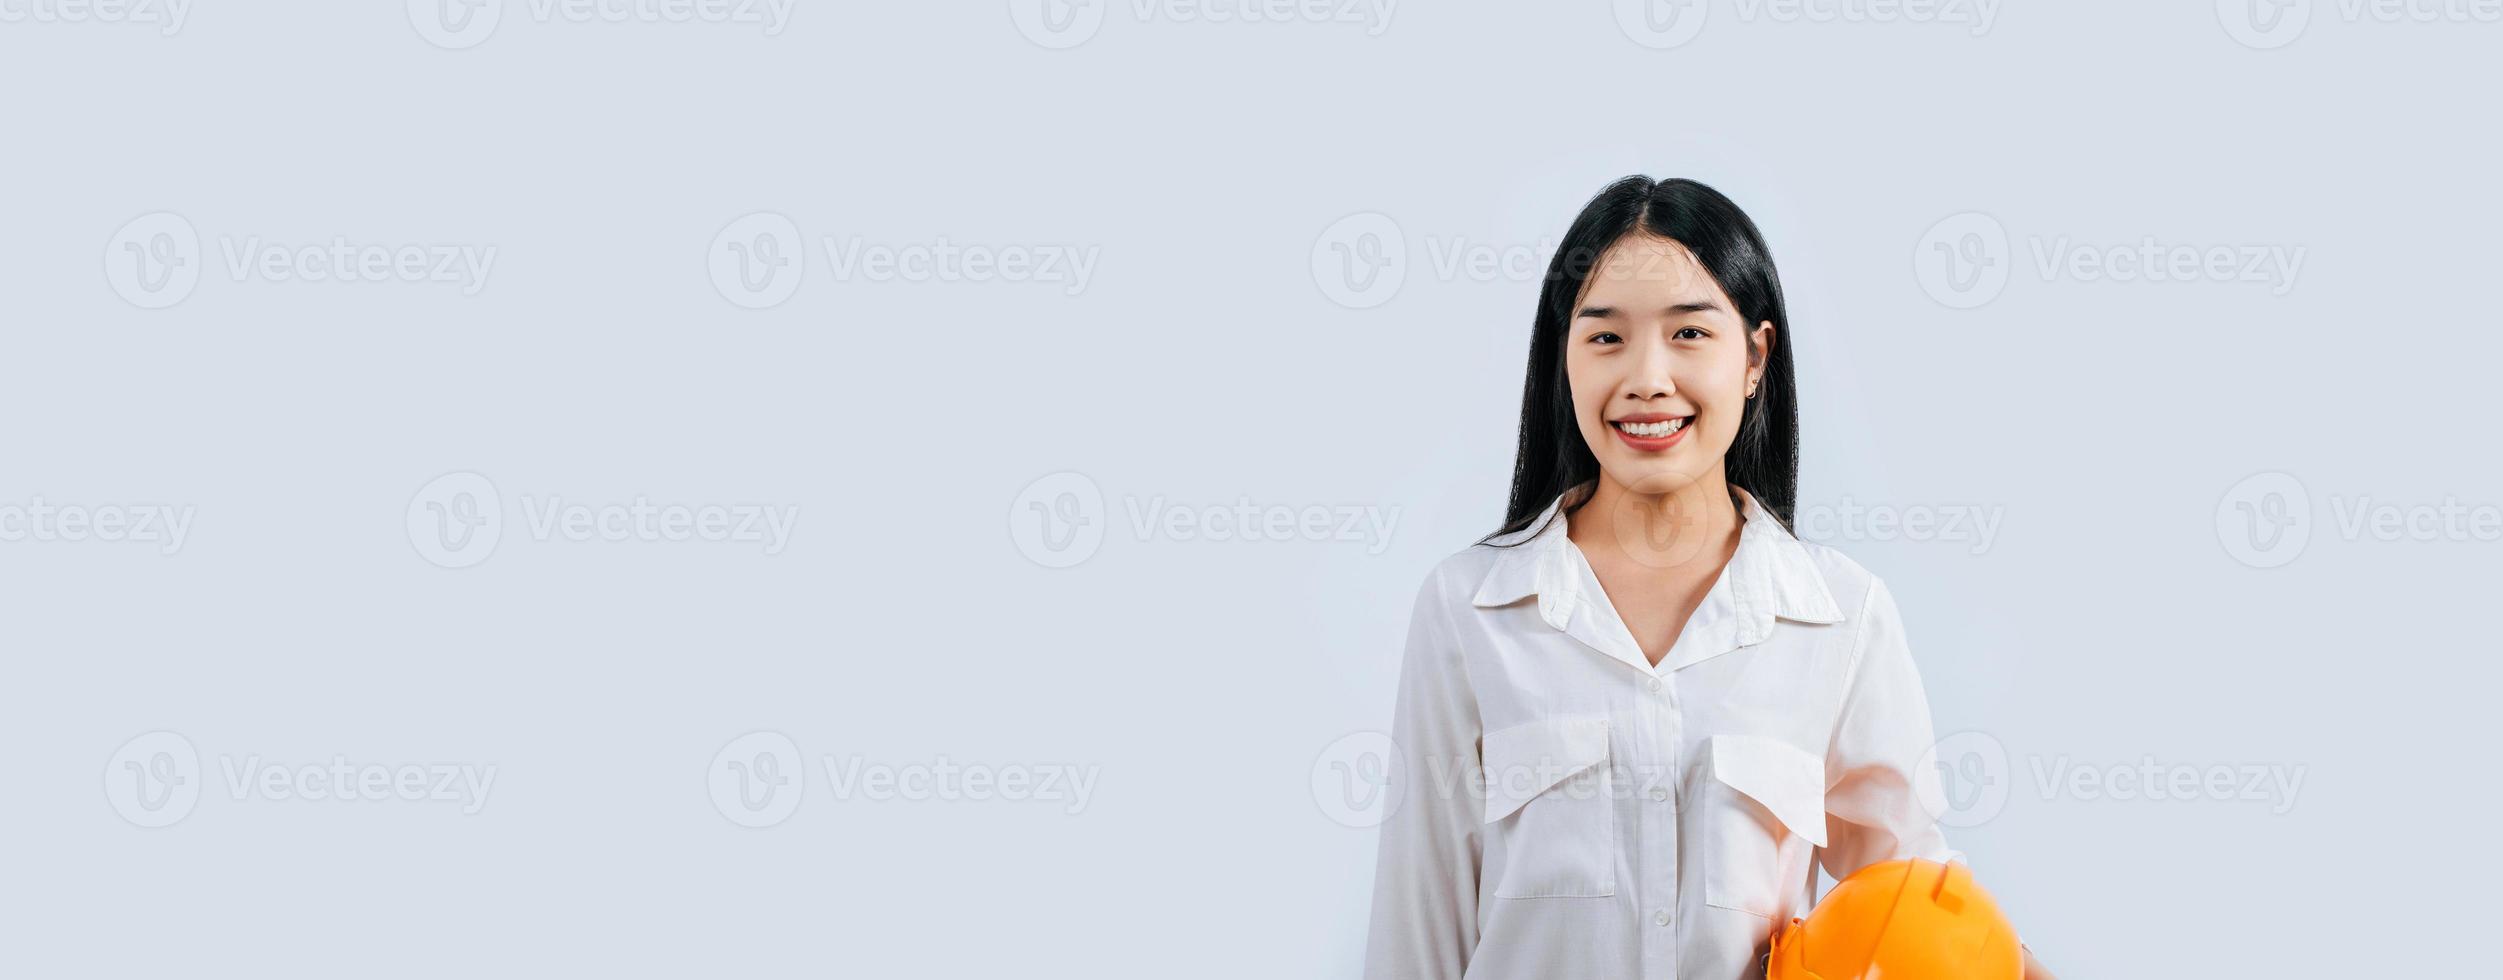 joven hembra ingeniero sostener amarillo casco estar con encantador sonrisa postura foto